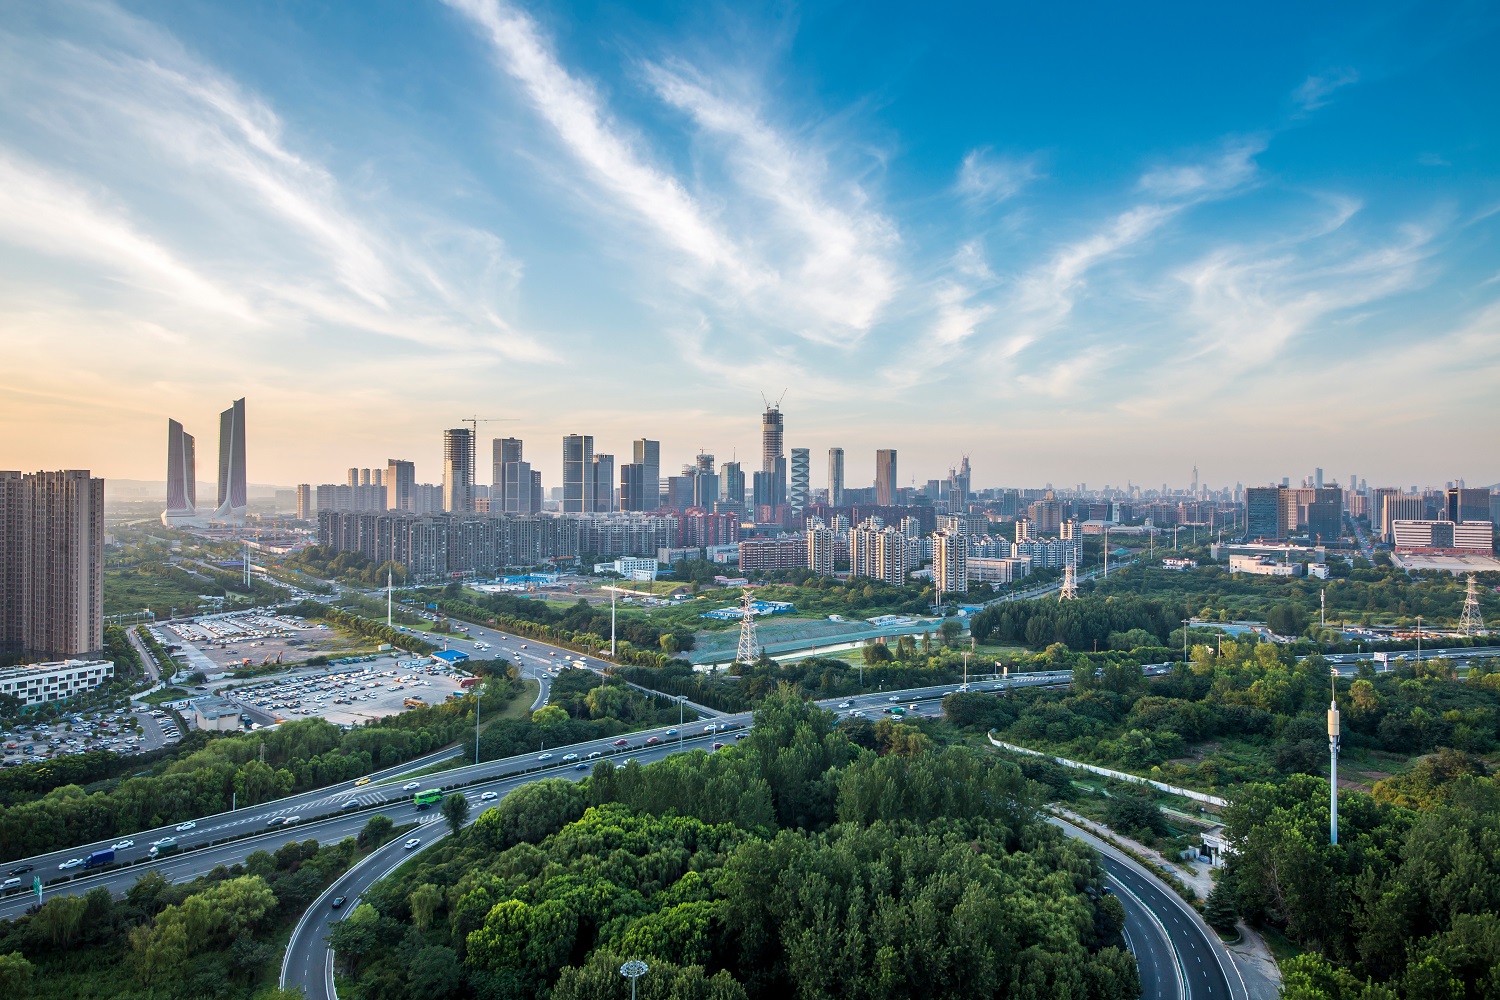 The skyline of Nanjing, Jiangsu Province, China.